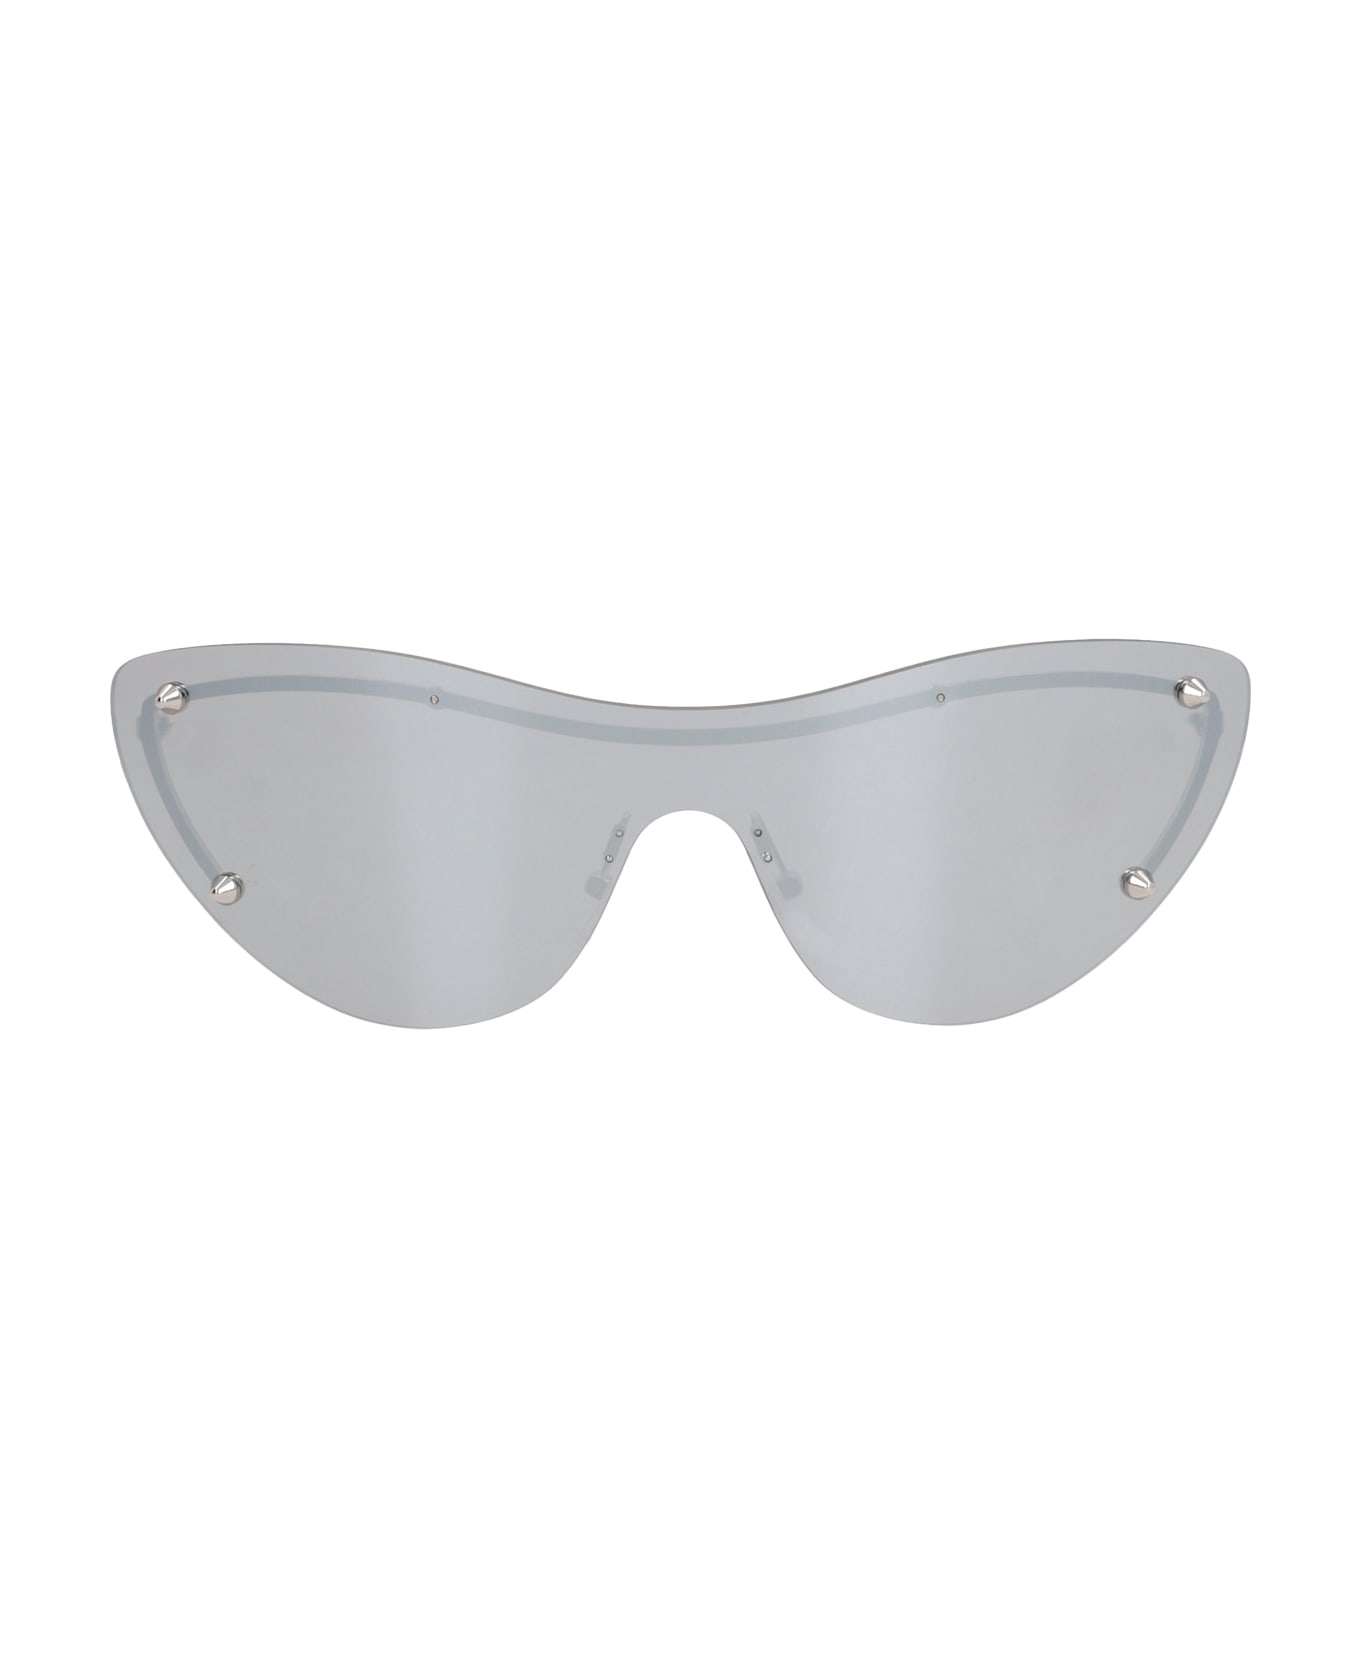 Alexander McQueen Eyewear Spike Studs Cat-eye Mask Sunglasses - Argento